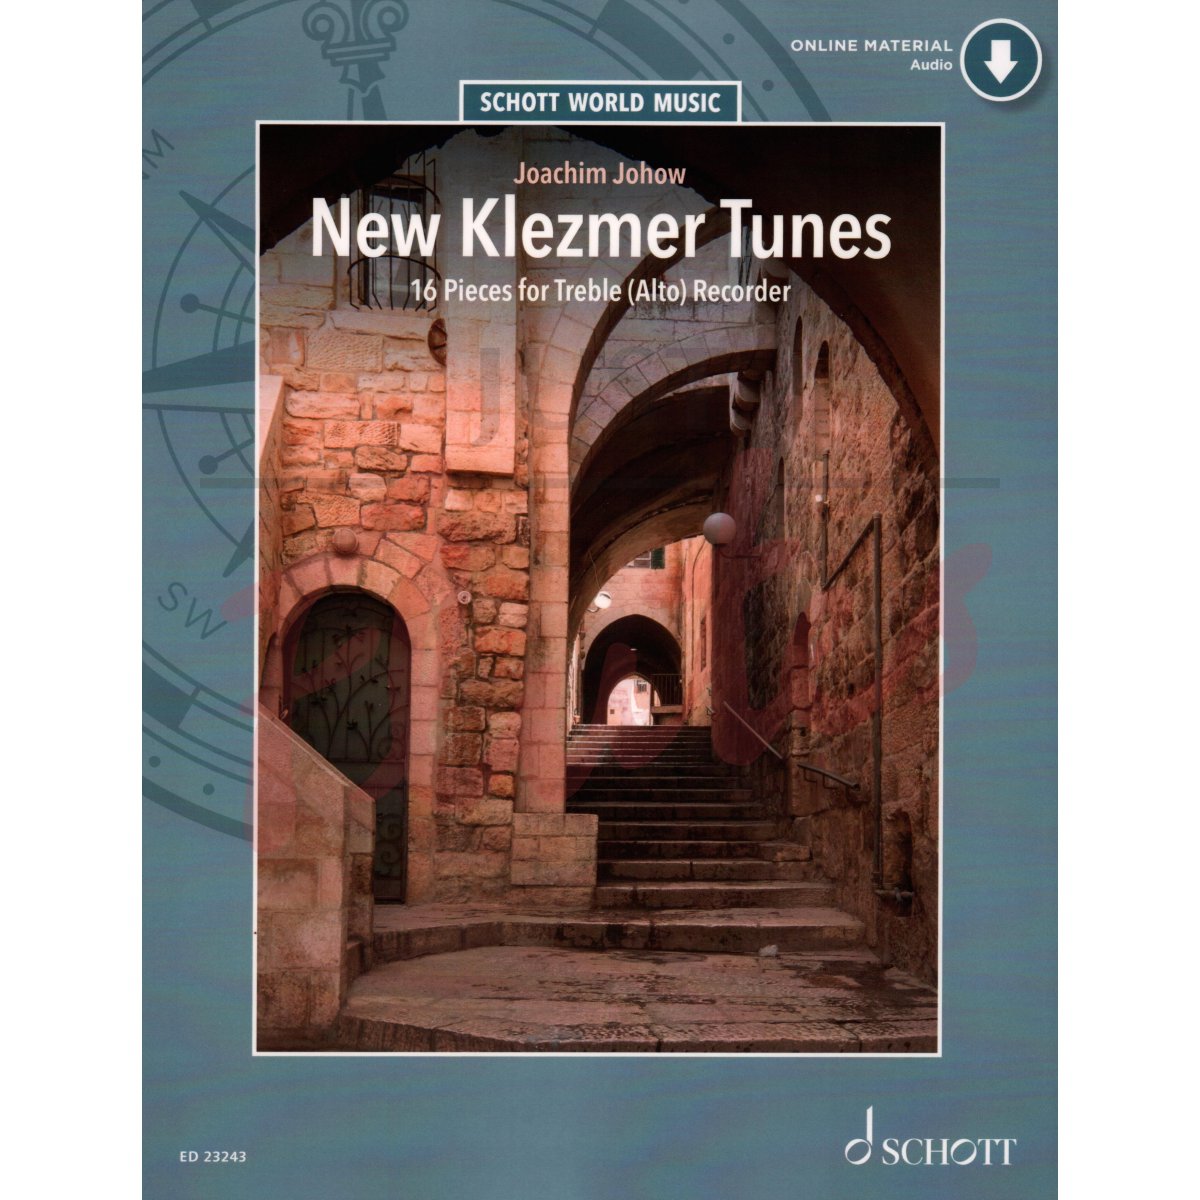 New Klezmer Tunes for Treble Recorder and Piano